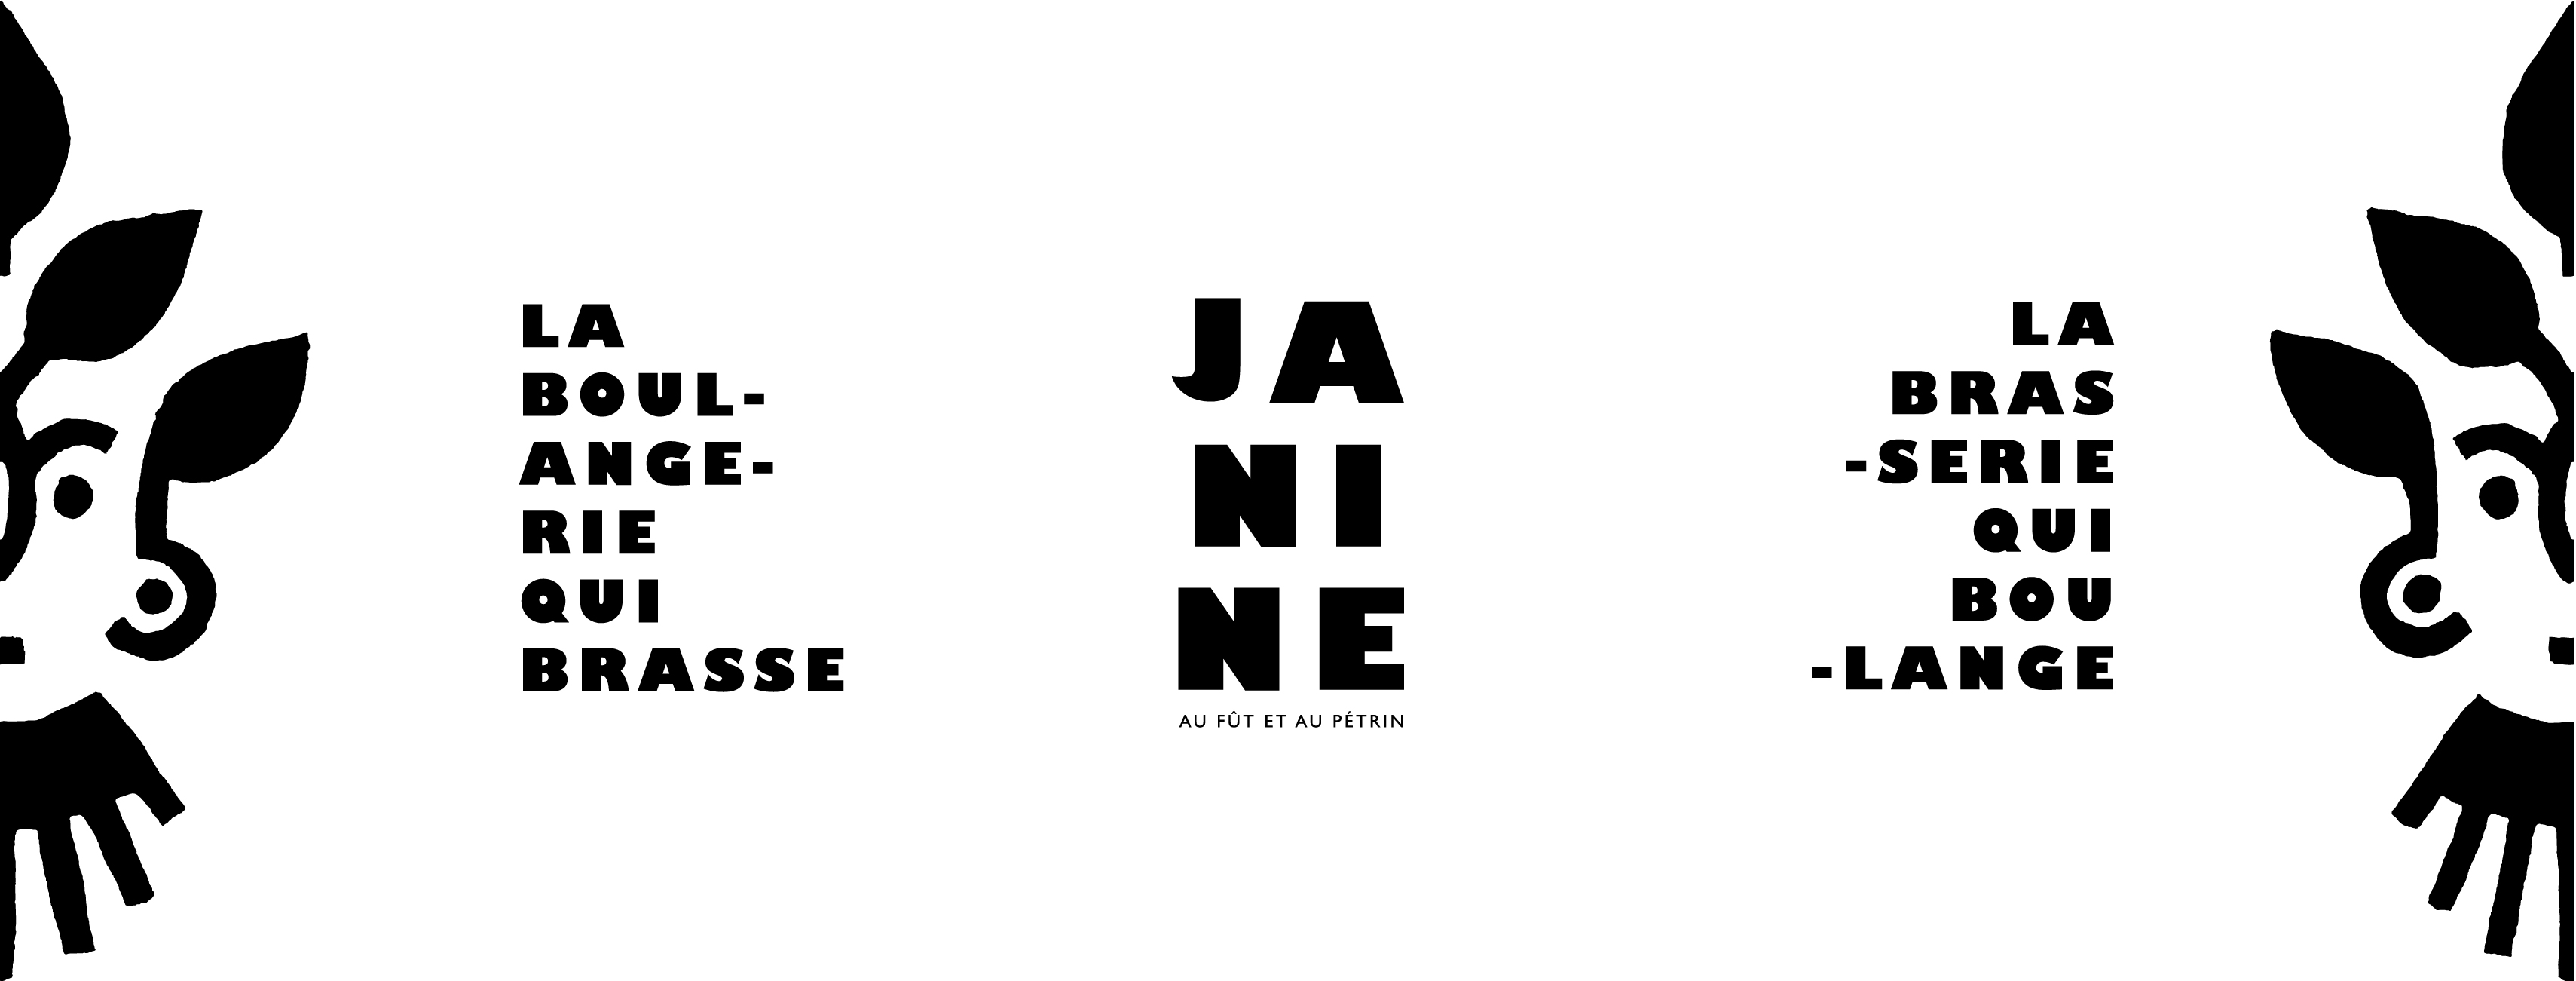 JANINE_Janine boulangerie